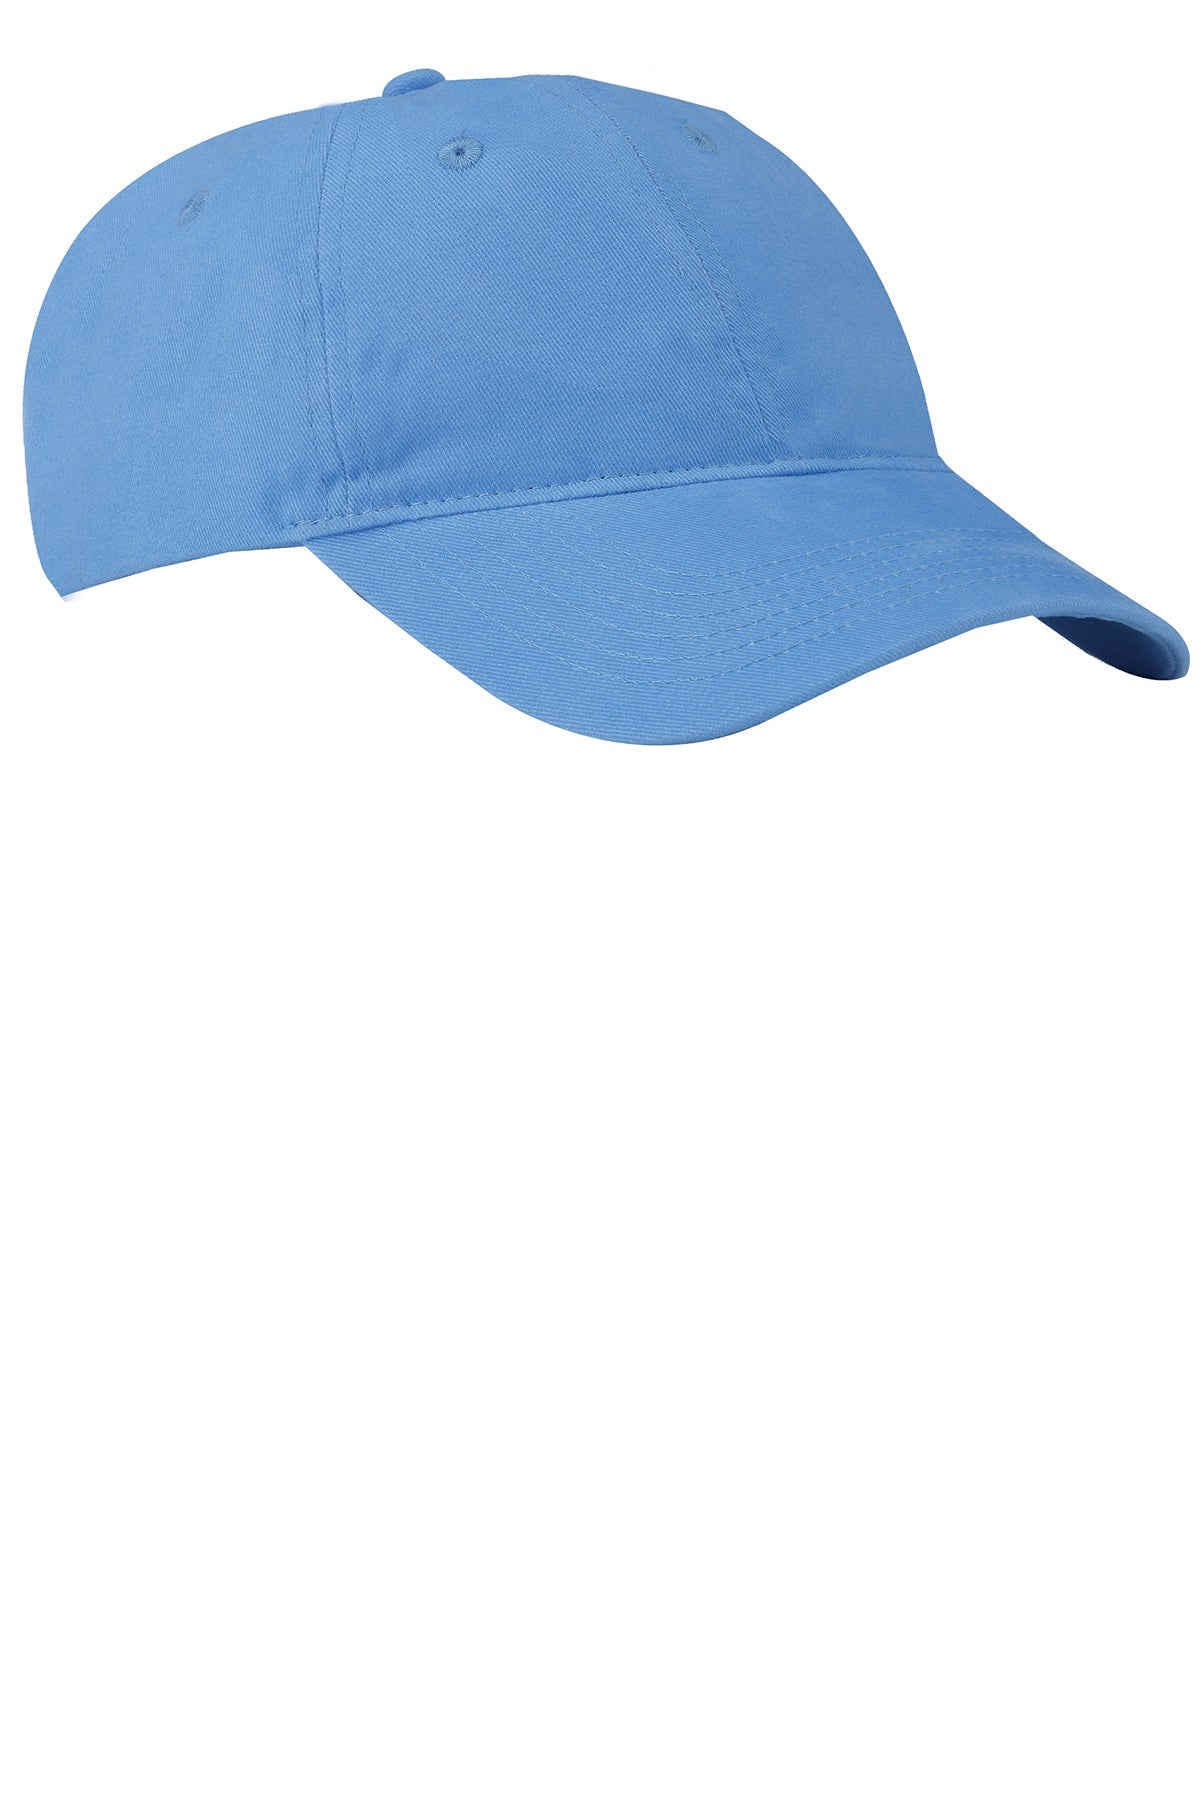 Port & Company Brushed Twill Branded Caps, Carolina Blue